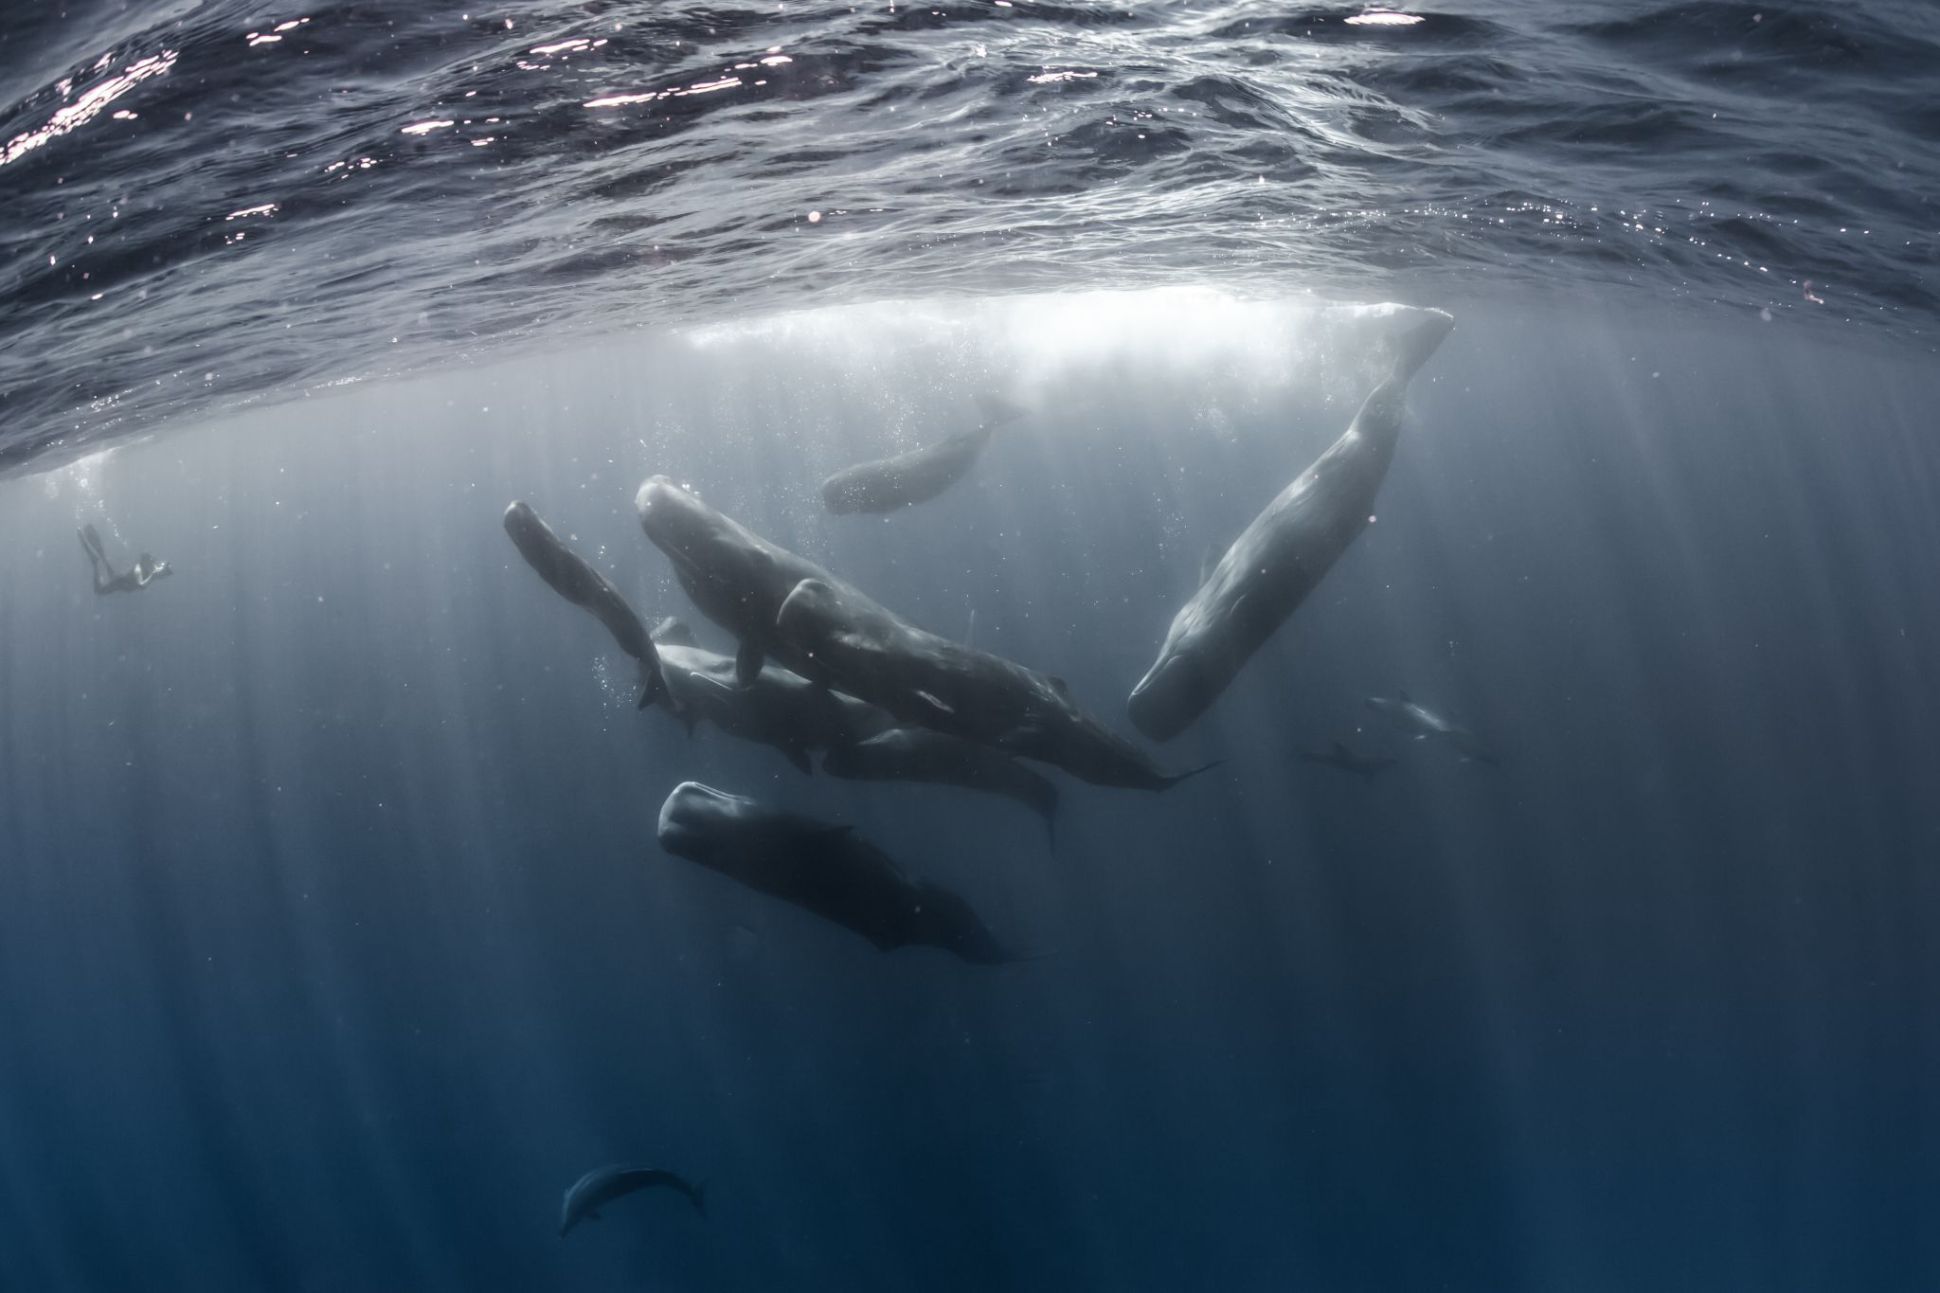 The giant biting sperm whale photos